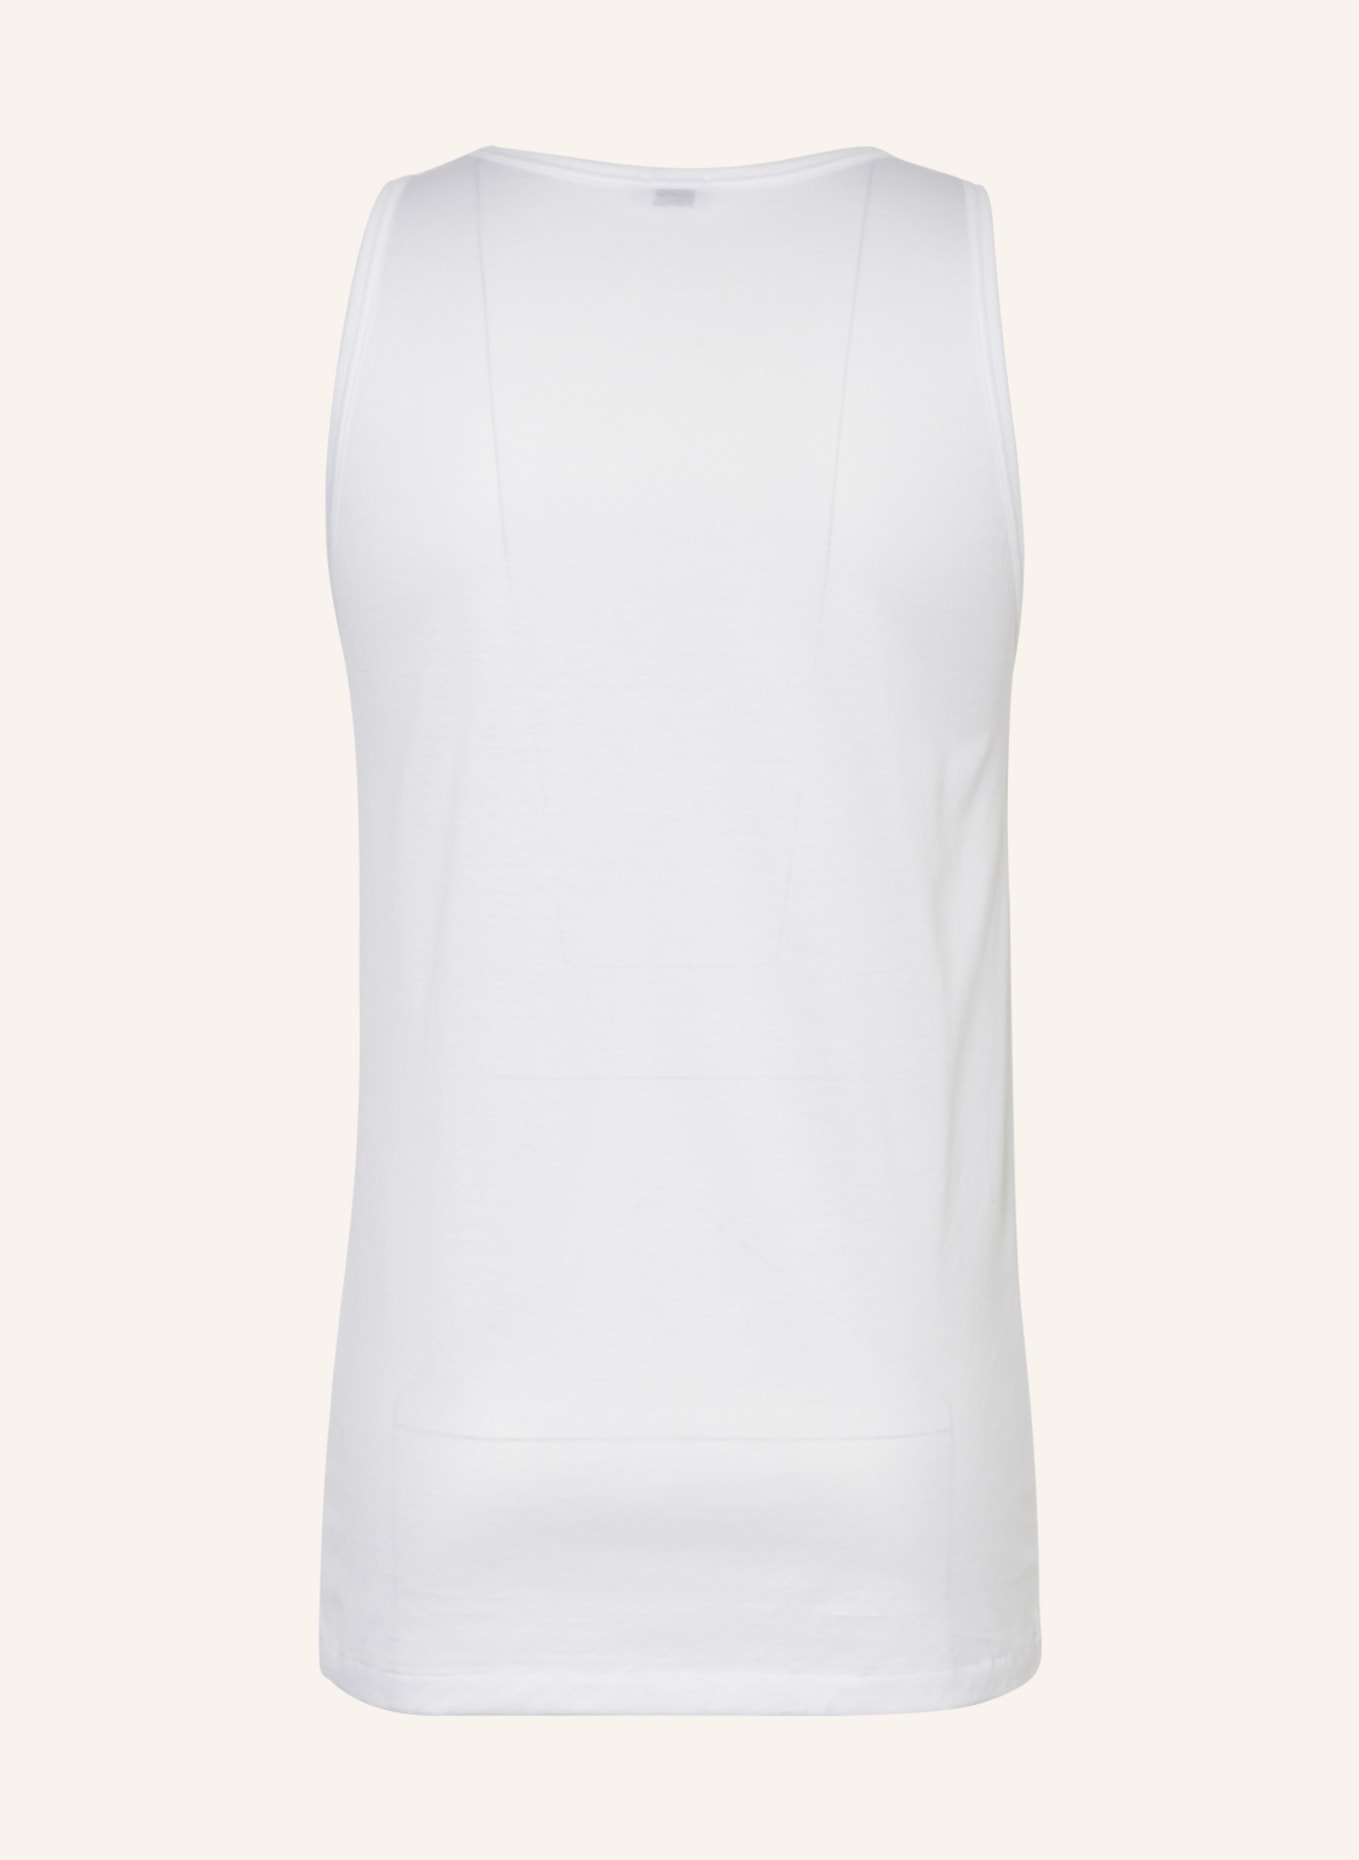 zimmerli Unterhemd ROYAL CLASSIC, Farbe: WEISS (Bild 2)